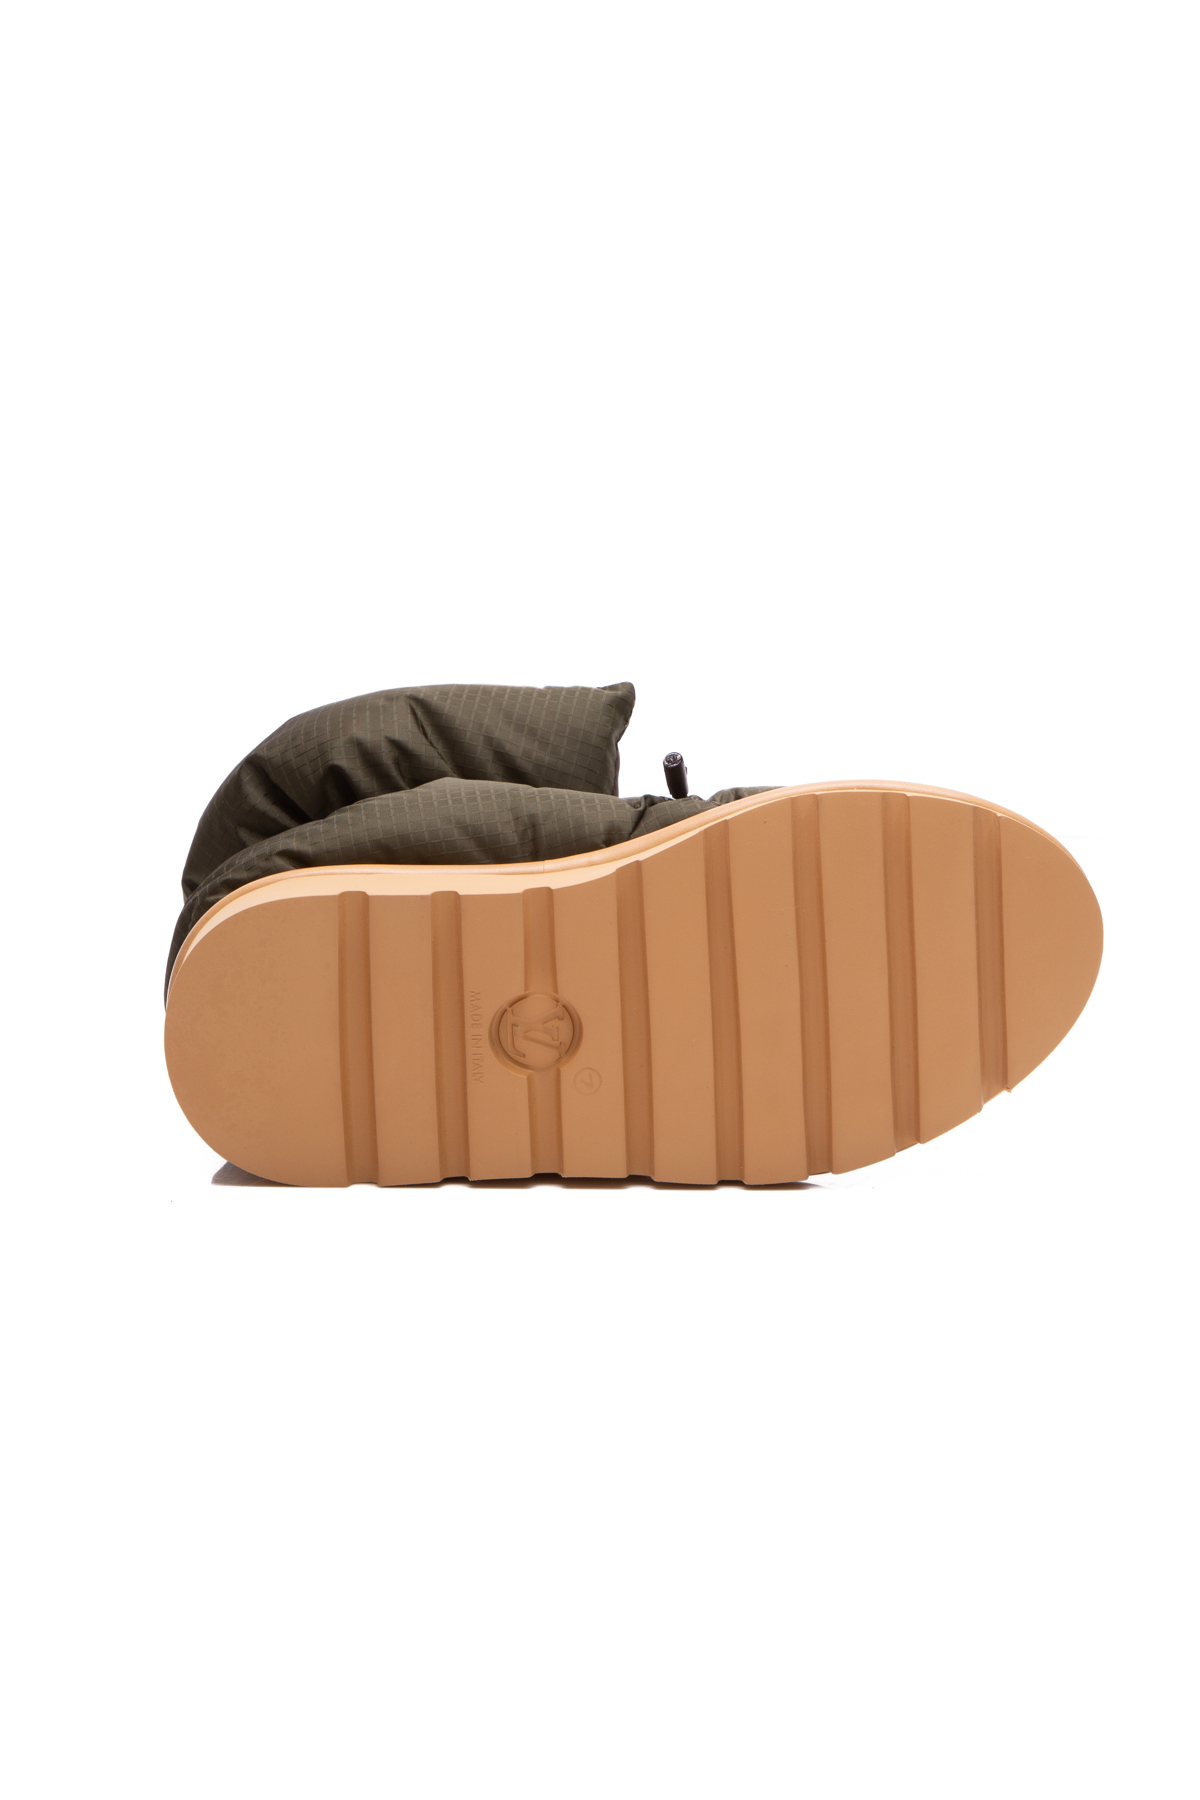 Louis Vuitton Pillow Comfort Ankle Boots